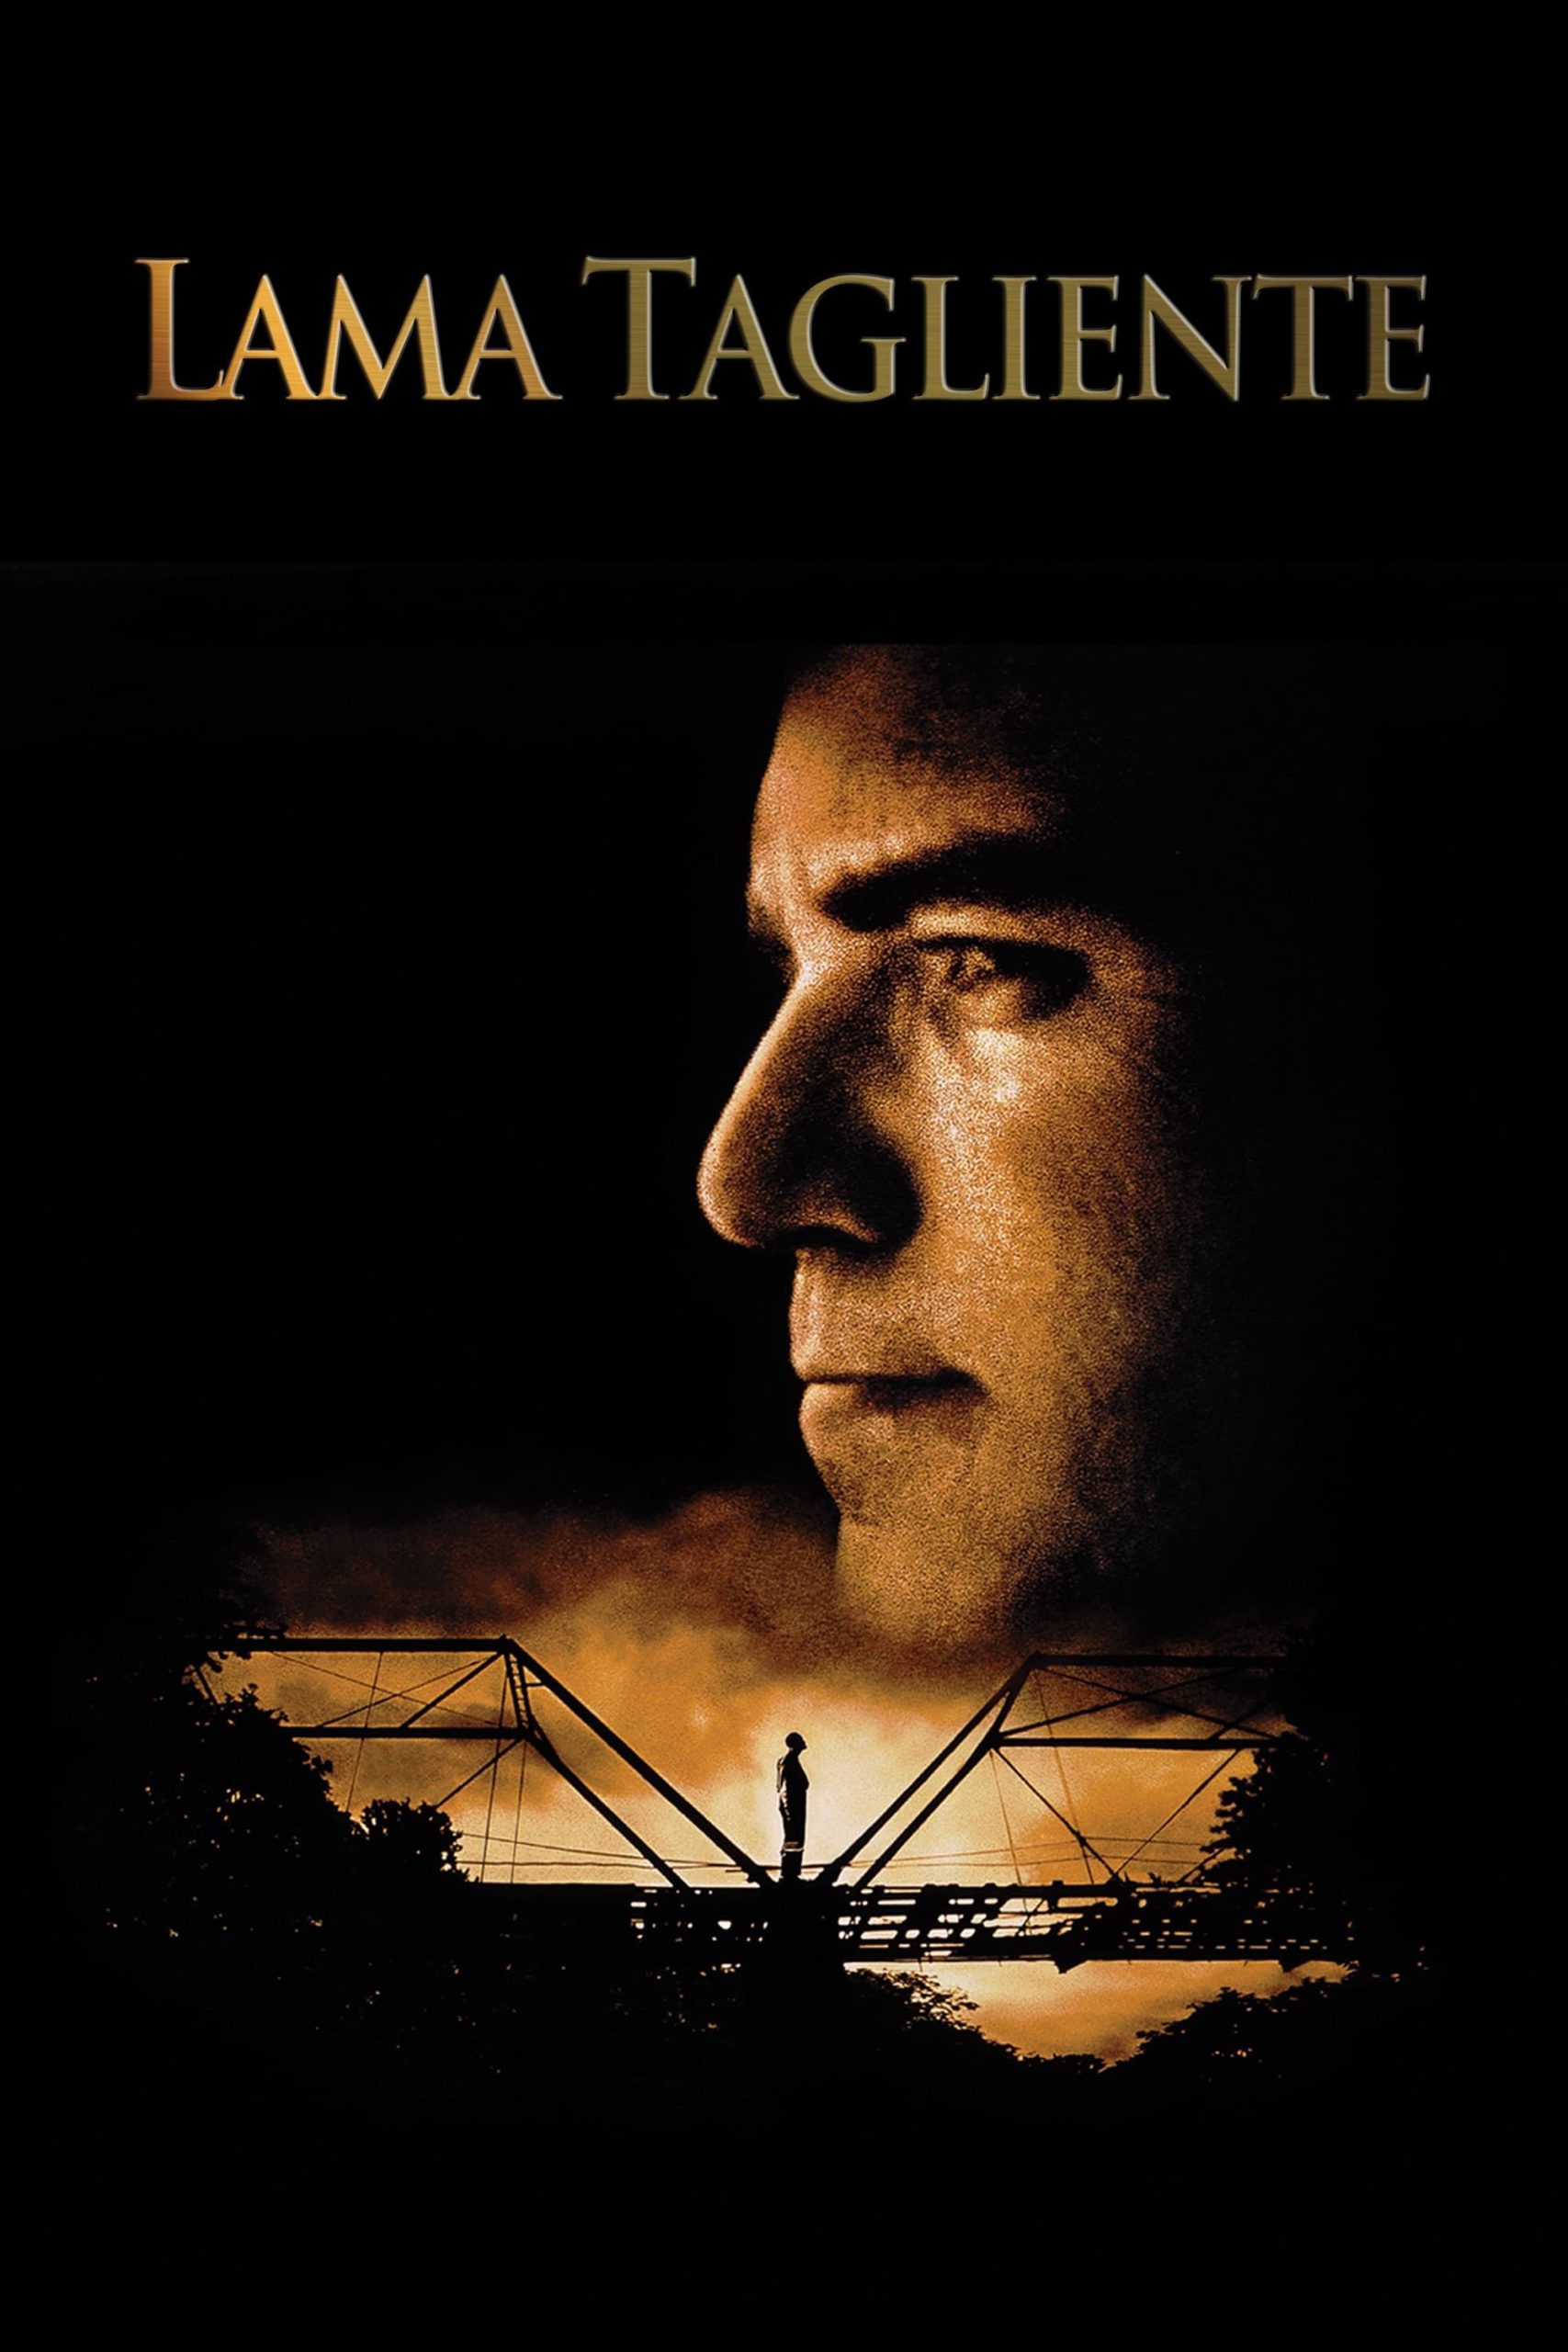 Lama tagliente [HD] (1996)